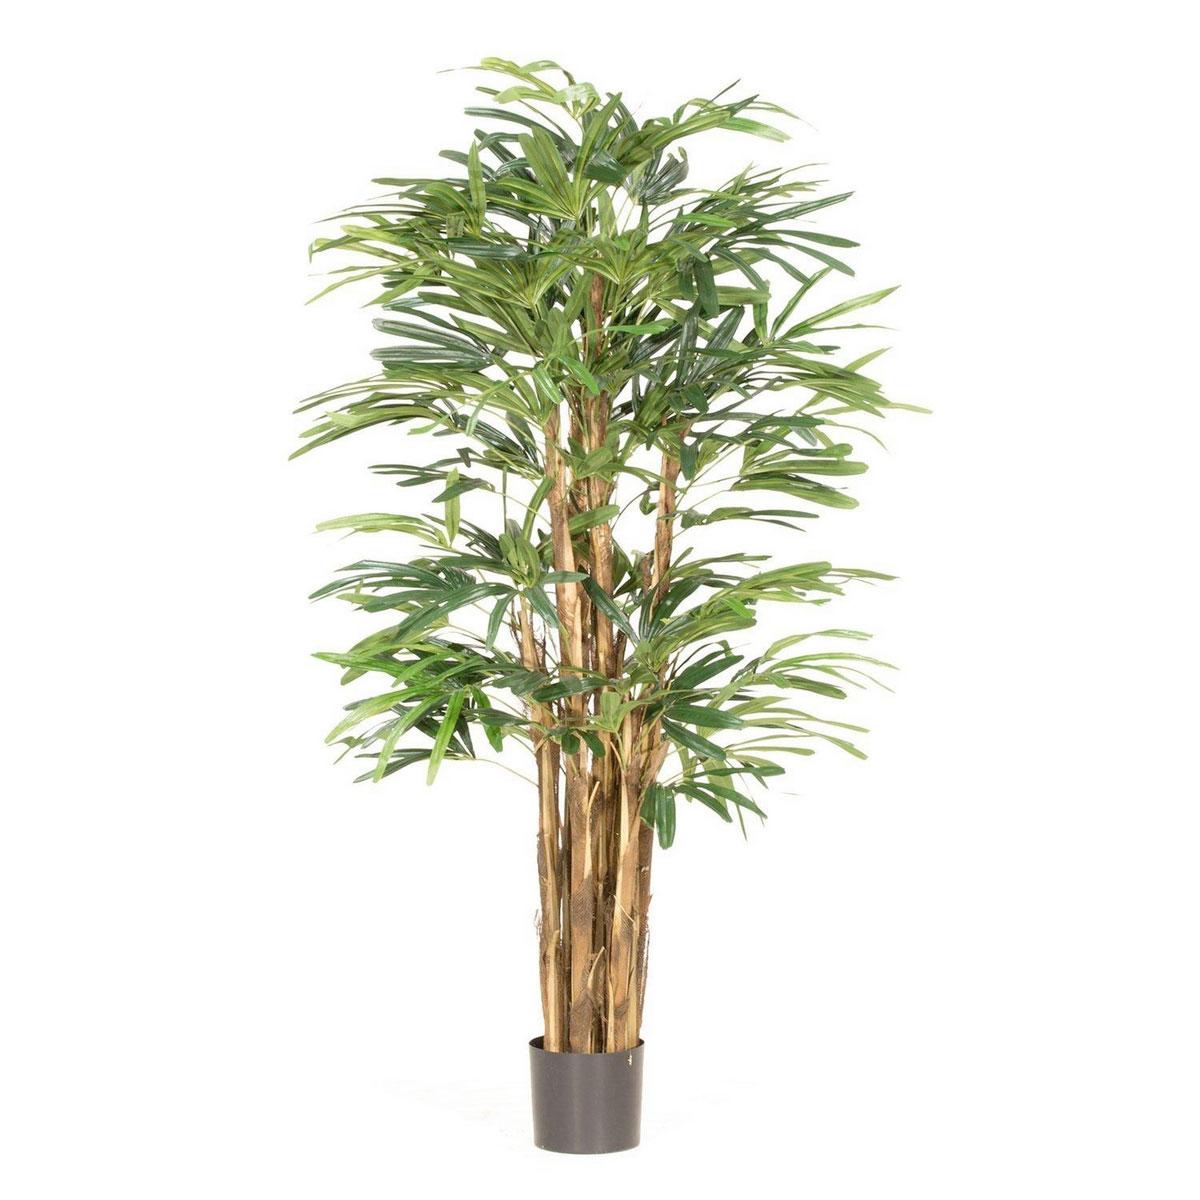 RAPHISPALME Artificial Tree Plant